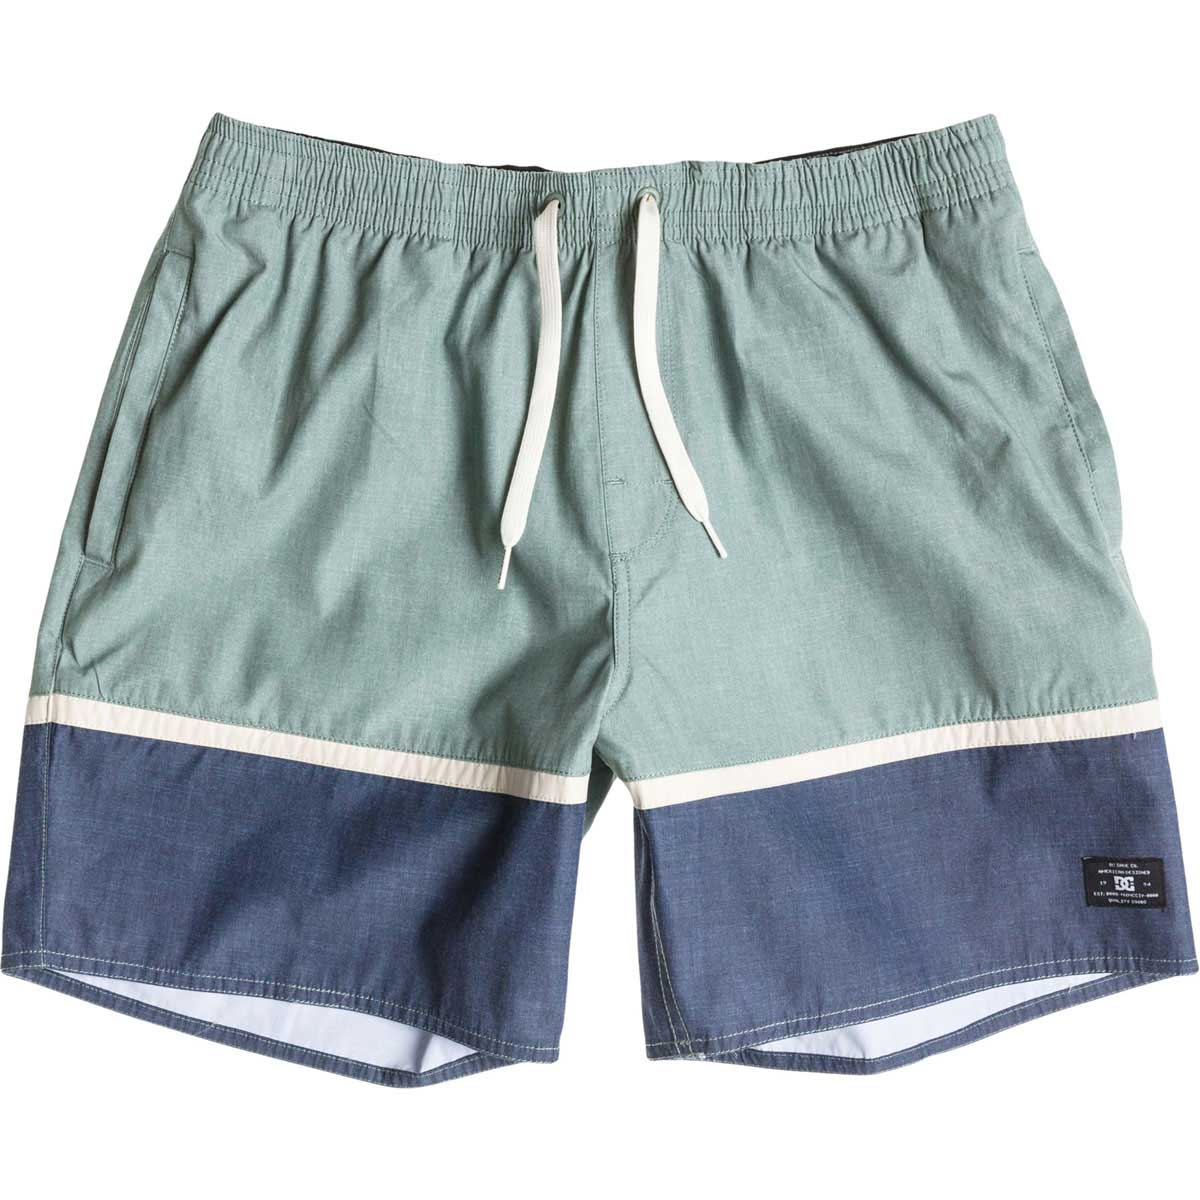 DC Turtle Bay Men's Boardshort Shorts - Lily Pad